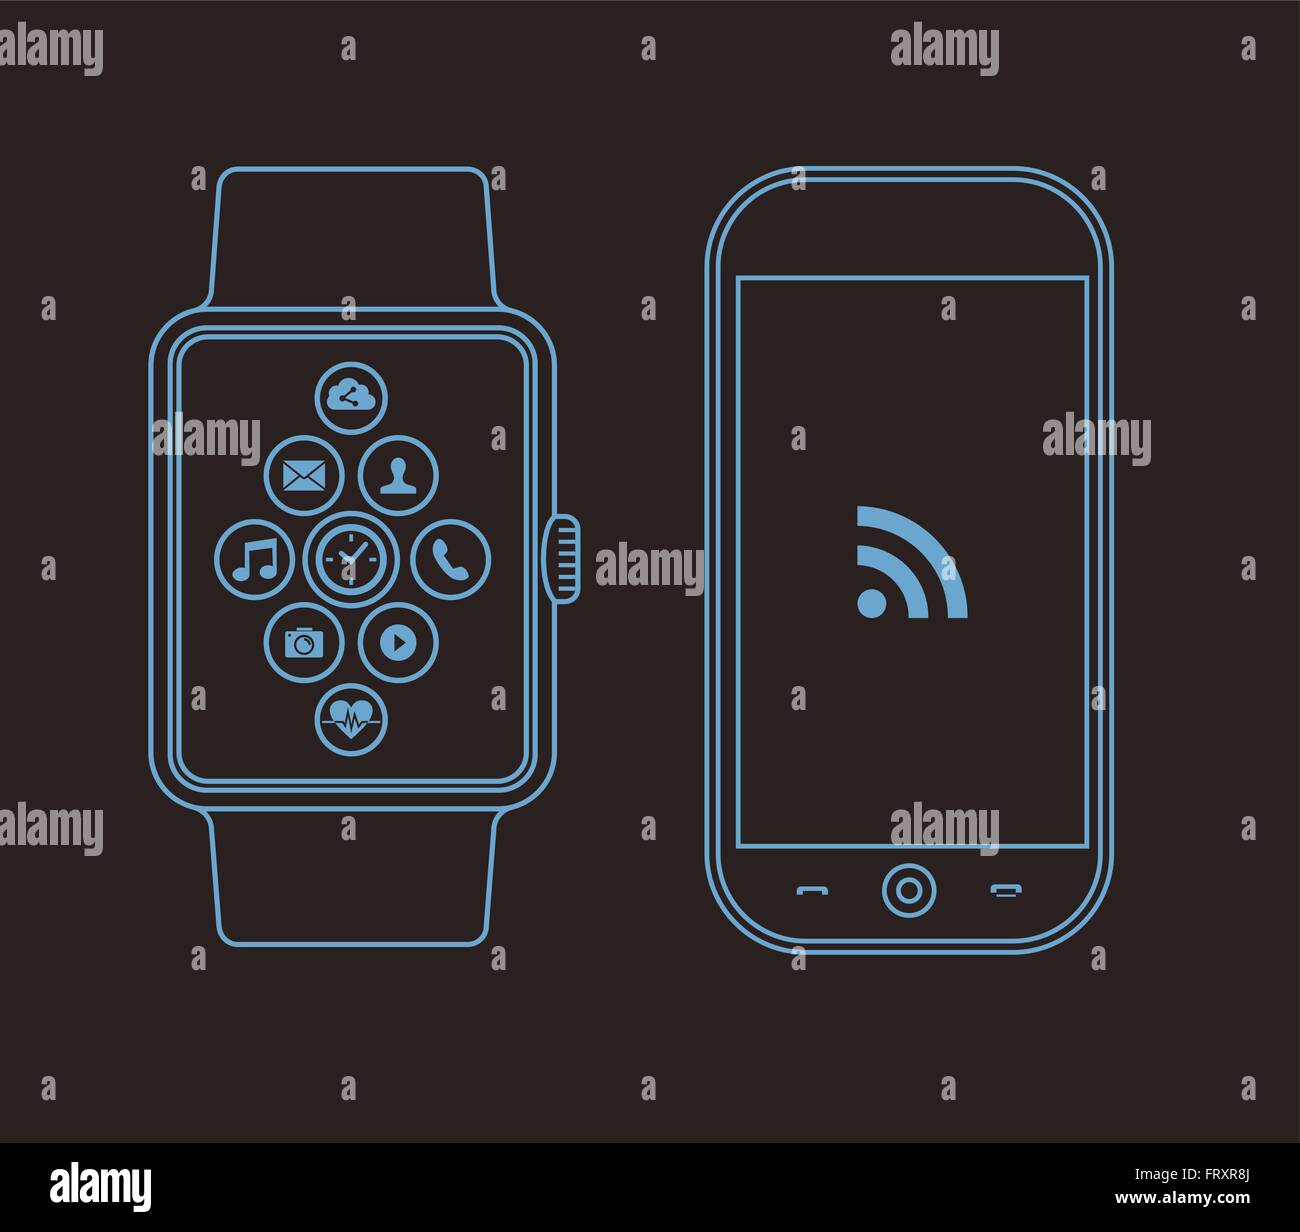 Konzept Umriss Illustration smart Watch und Handy mit social-app Icons auf dem Bildschirm. EPS10 Vektor. Stock Vektor